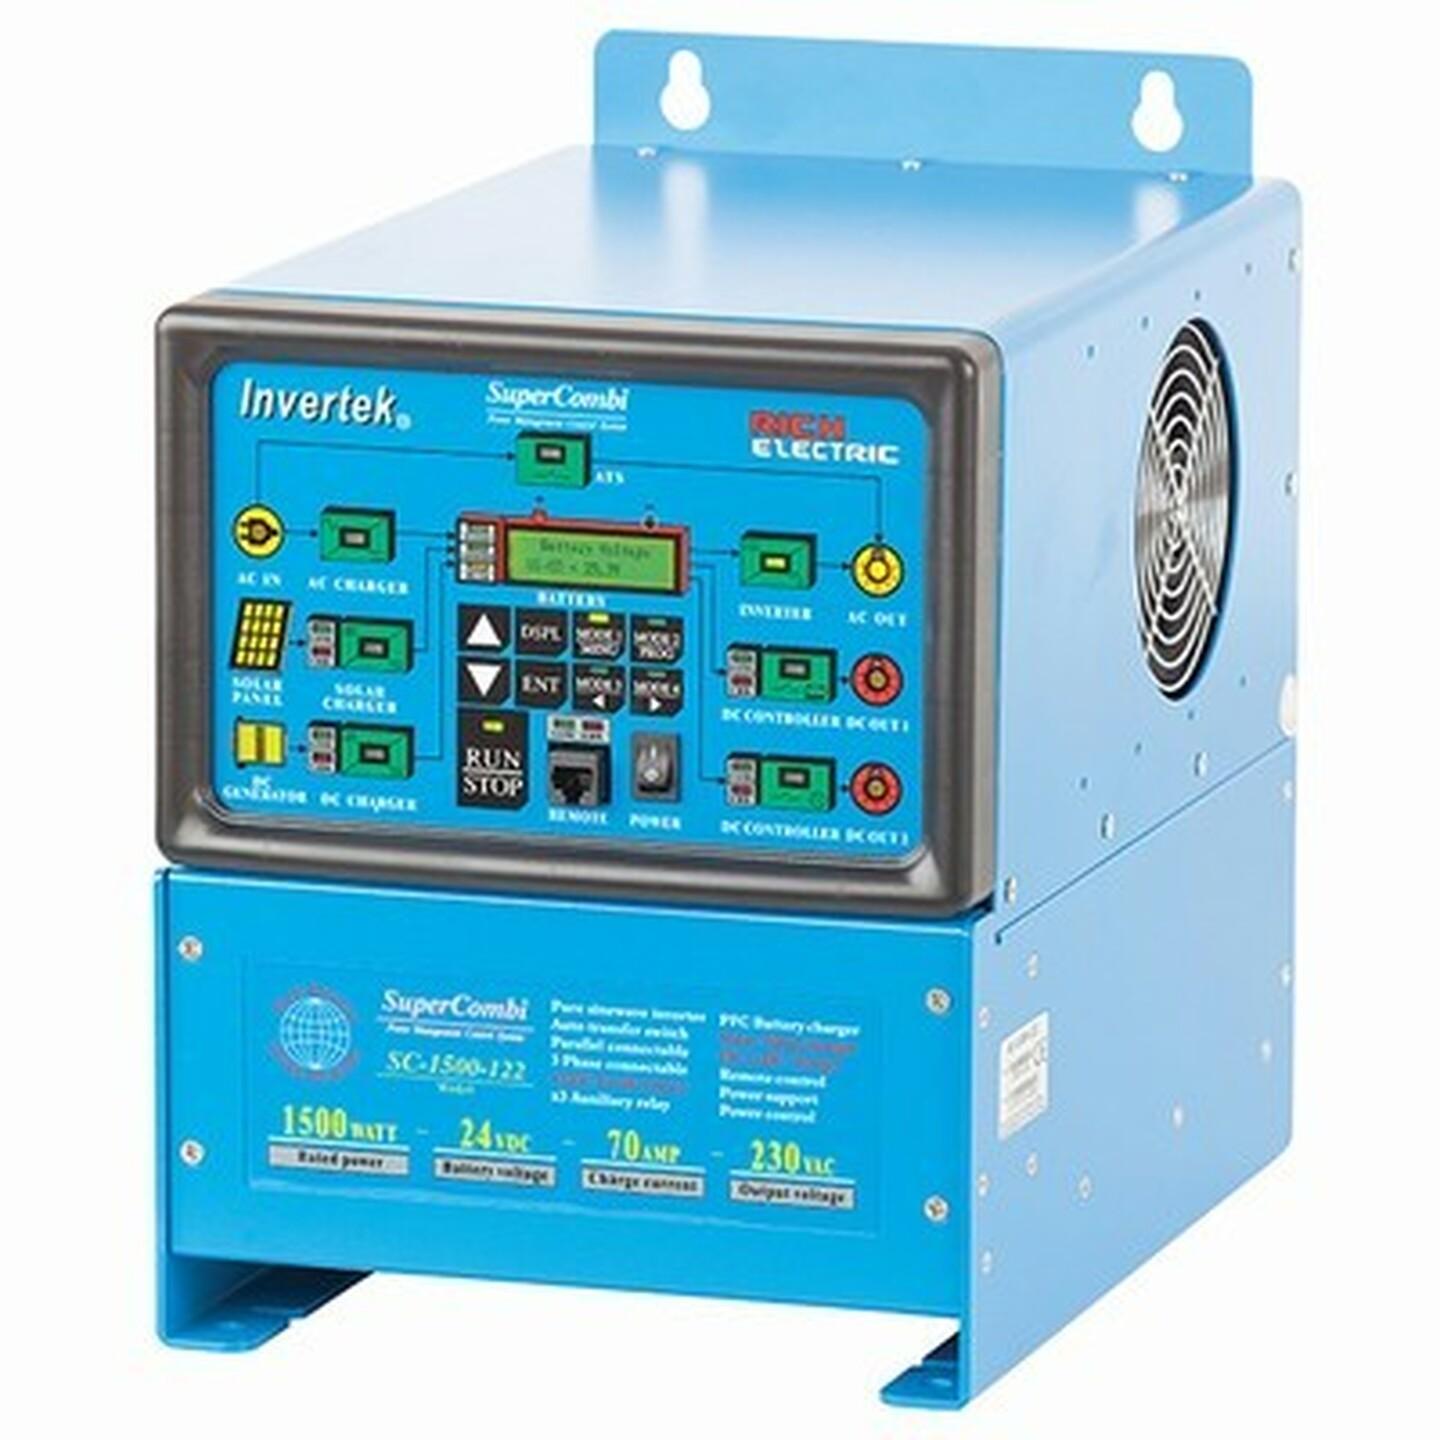 SuperCombi Power Management System 24V 1500W